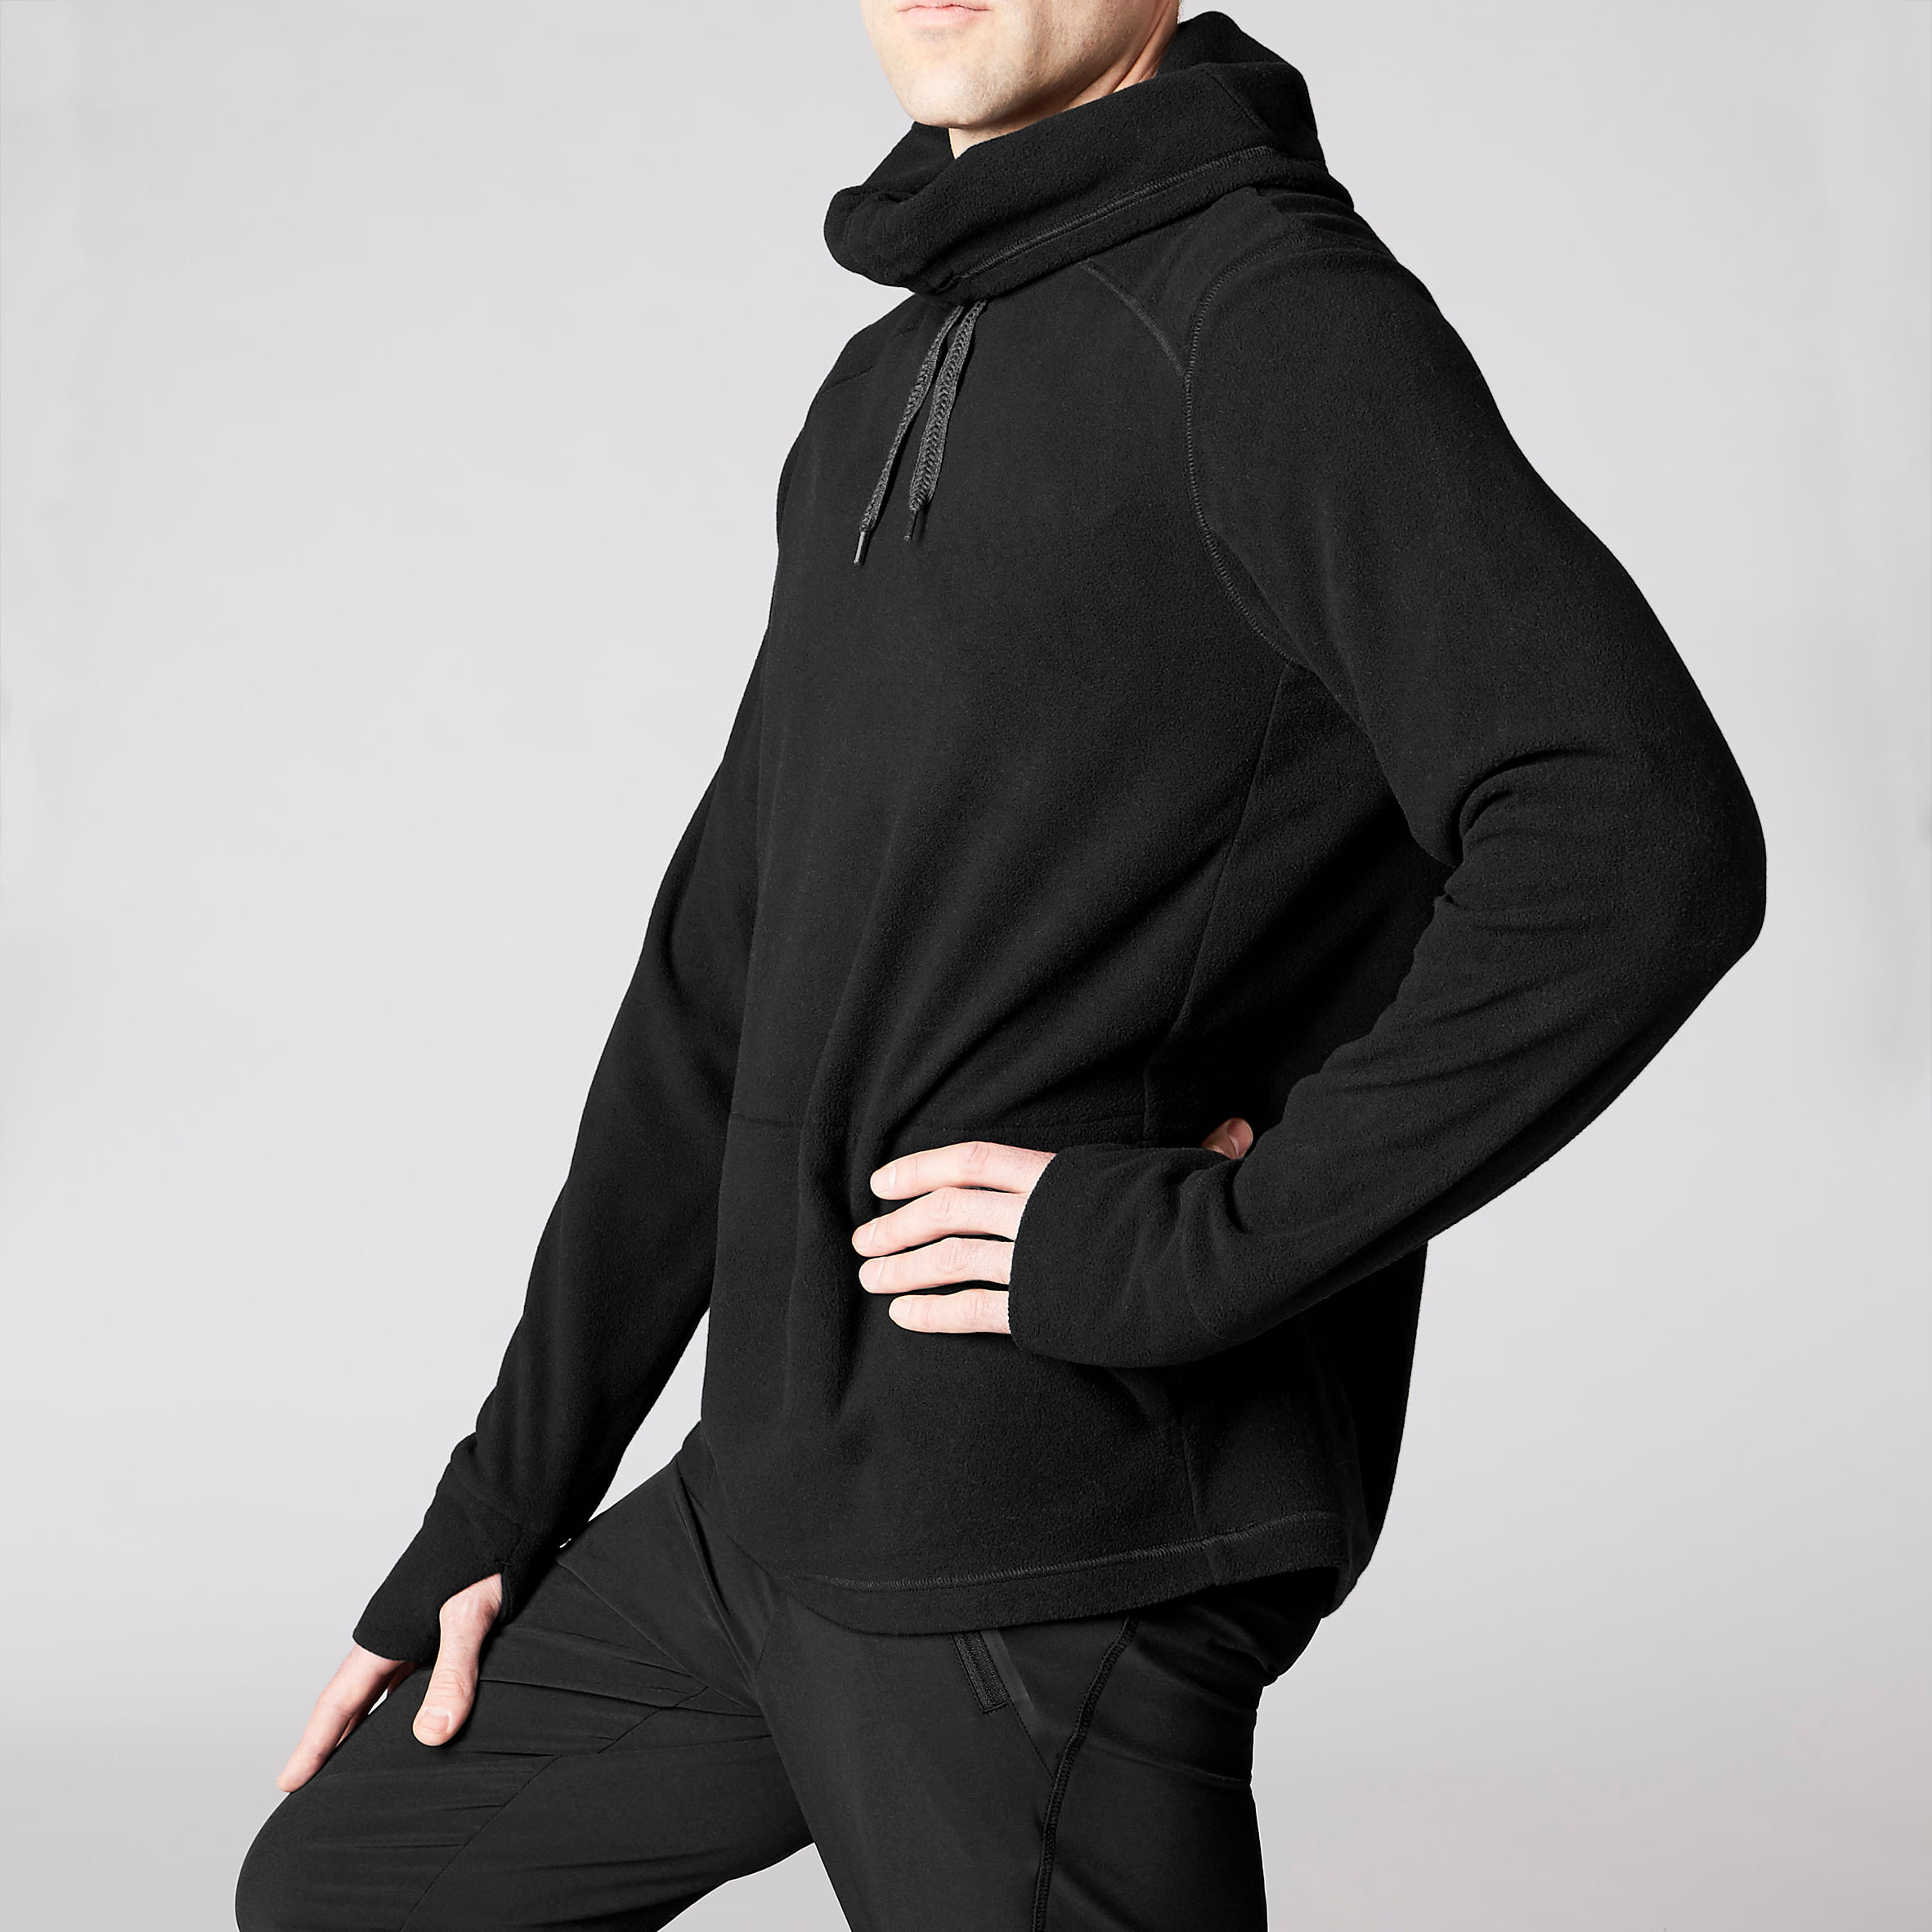 Men's Fleece Yoga Sweatshirt - Black 5/8